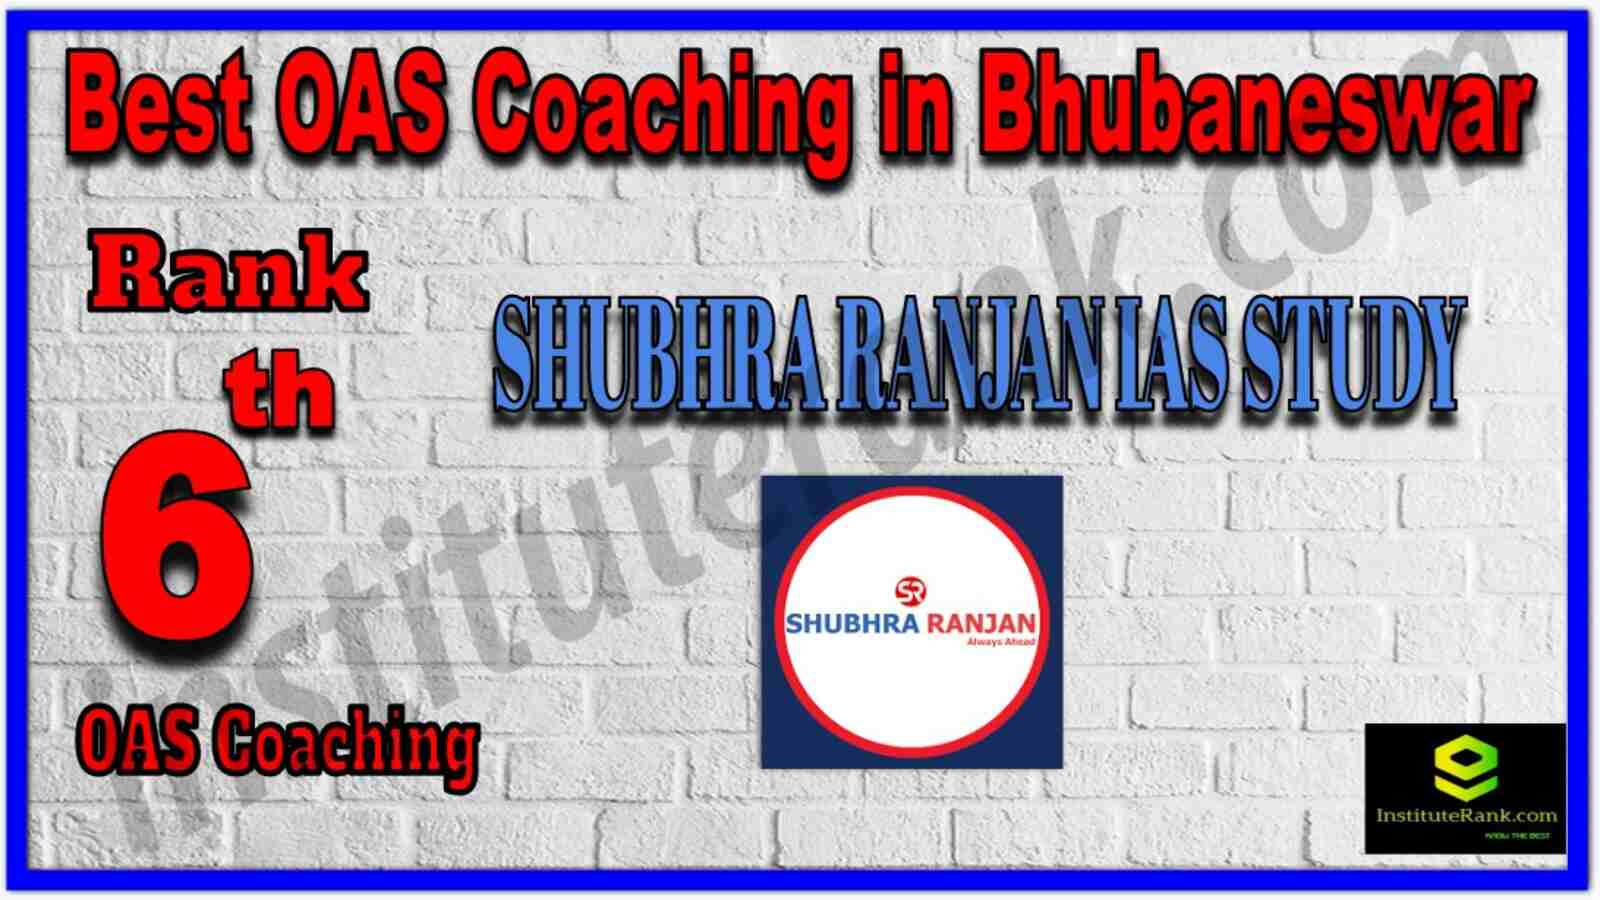 Rank 6 Best OAS Coaching in Bhubaneswar